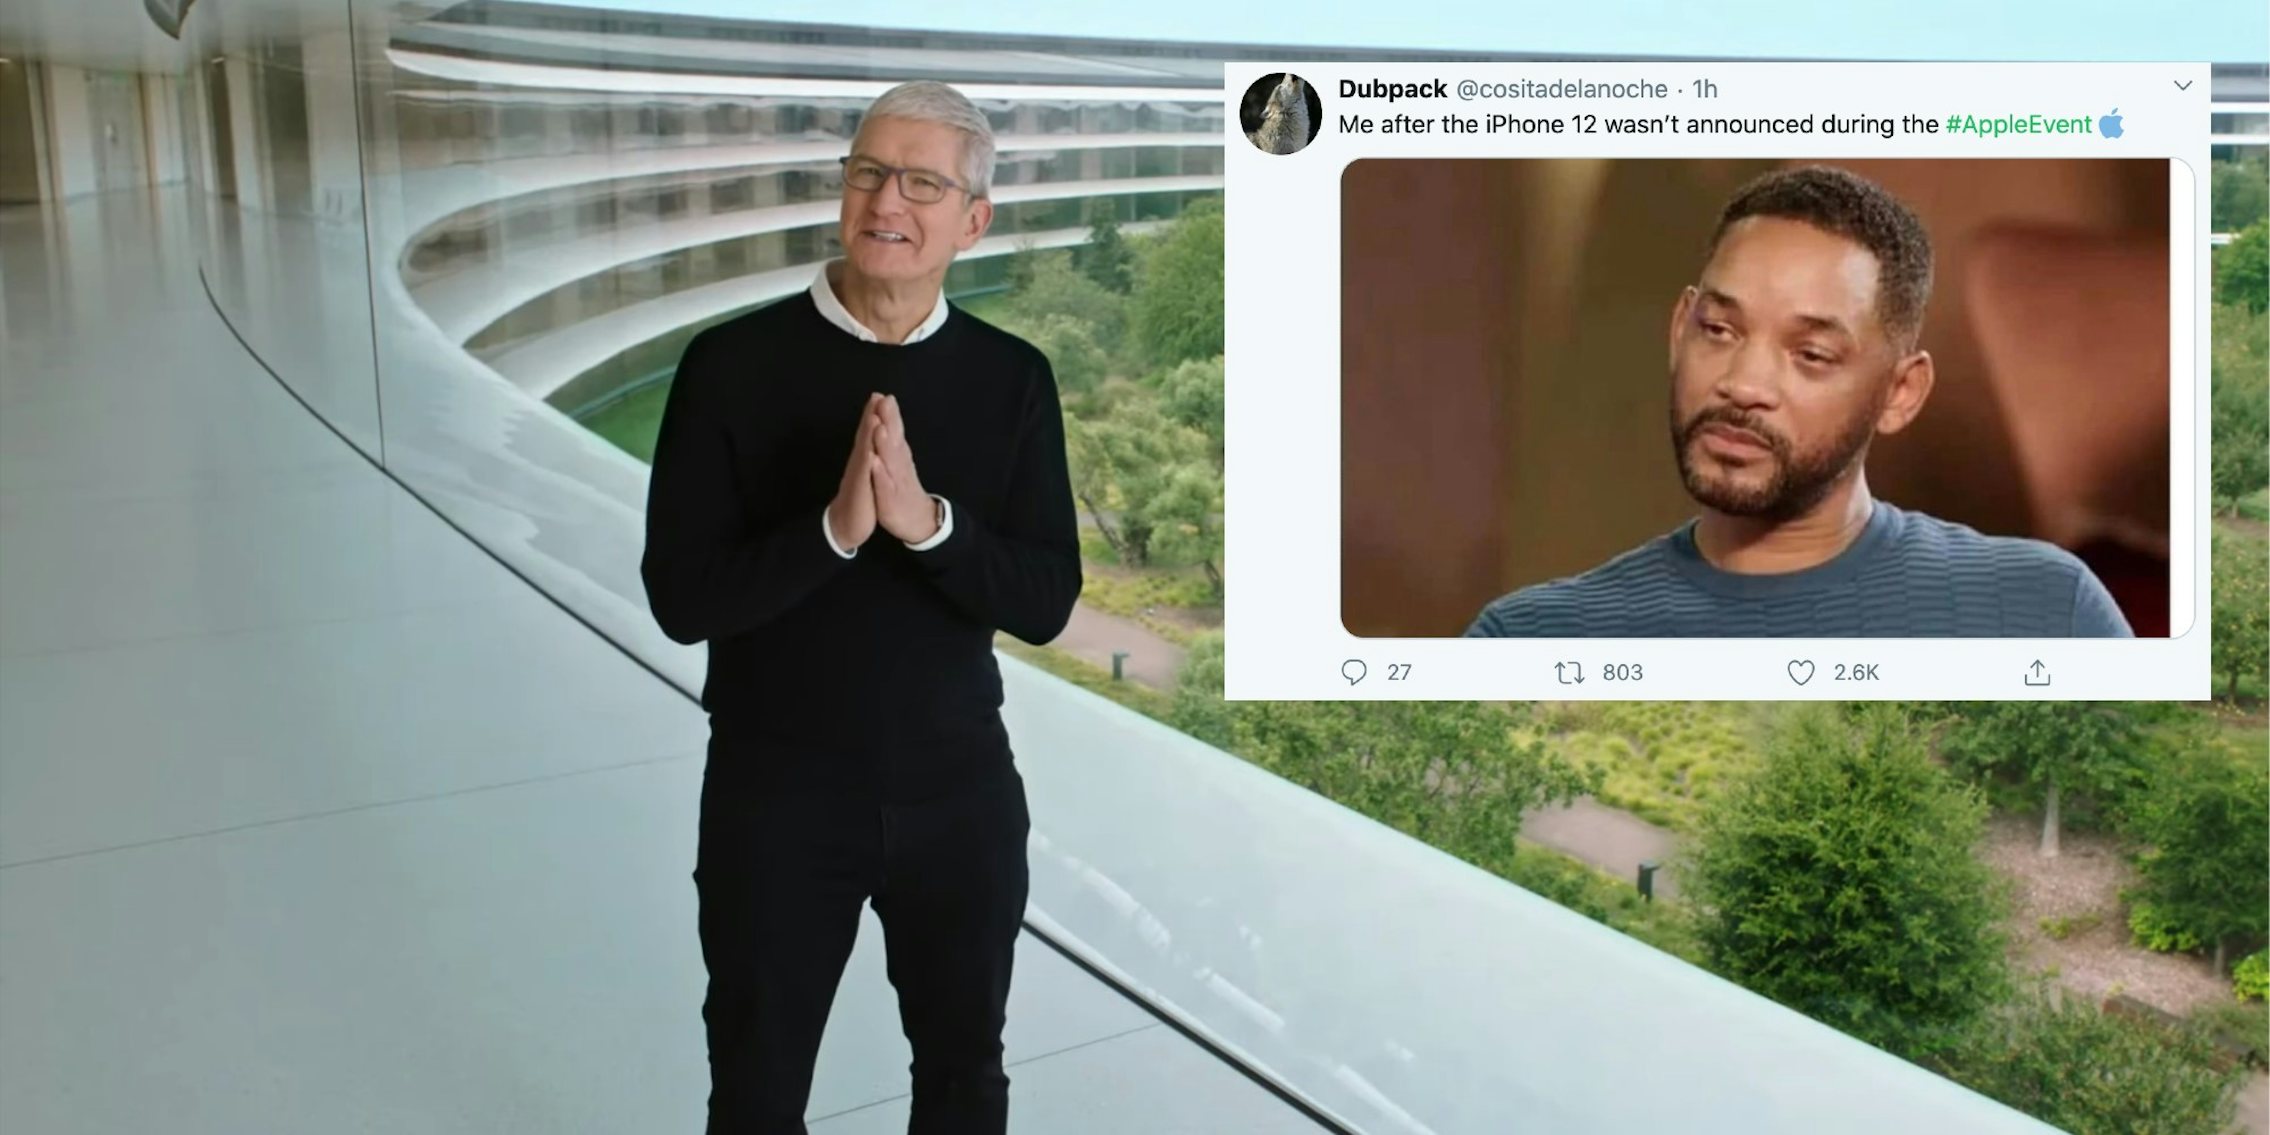 Apple CEO Tim Cook next to a tweet